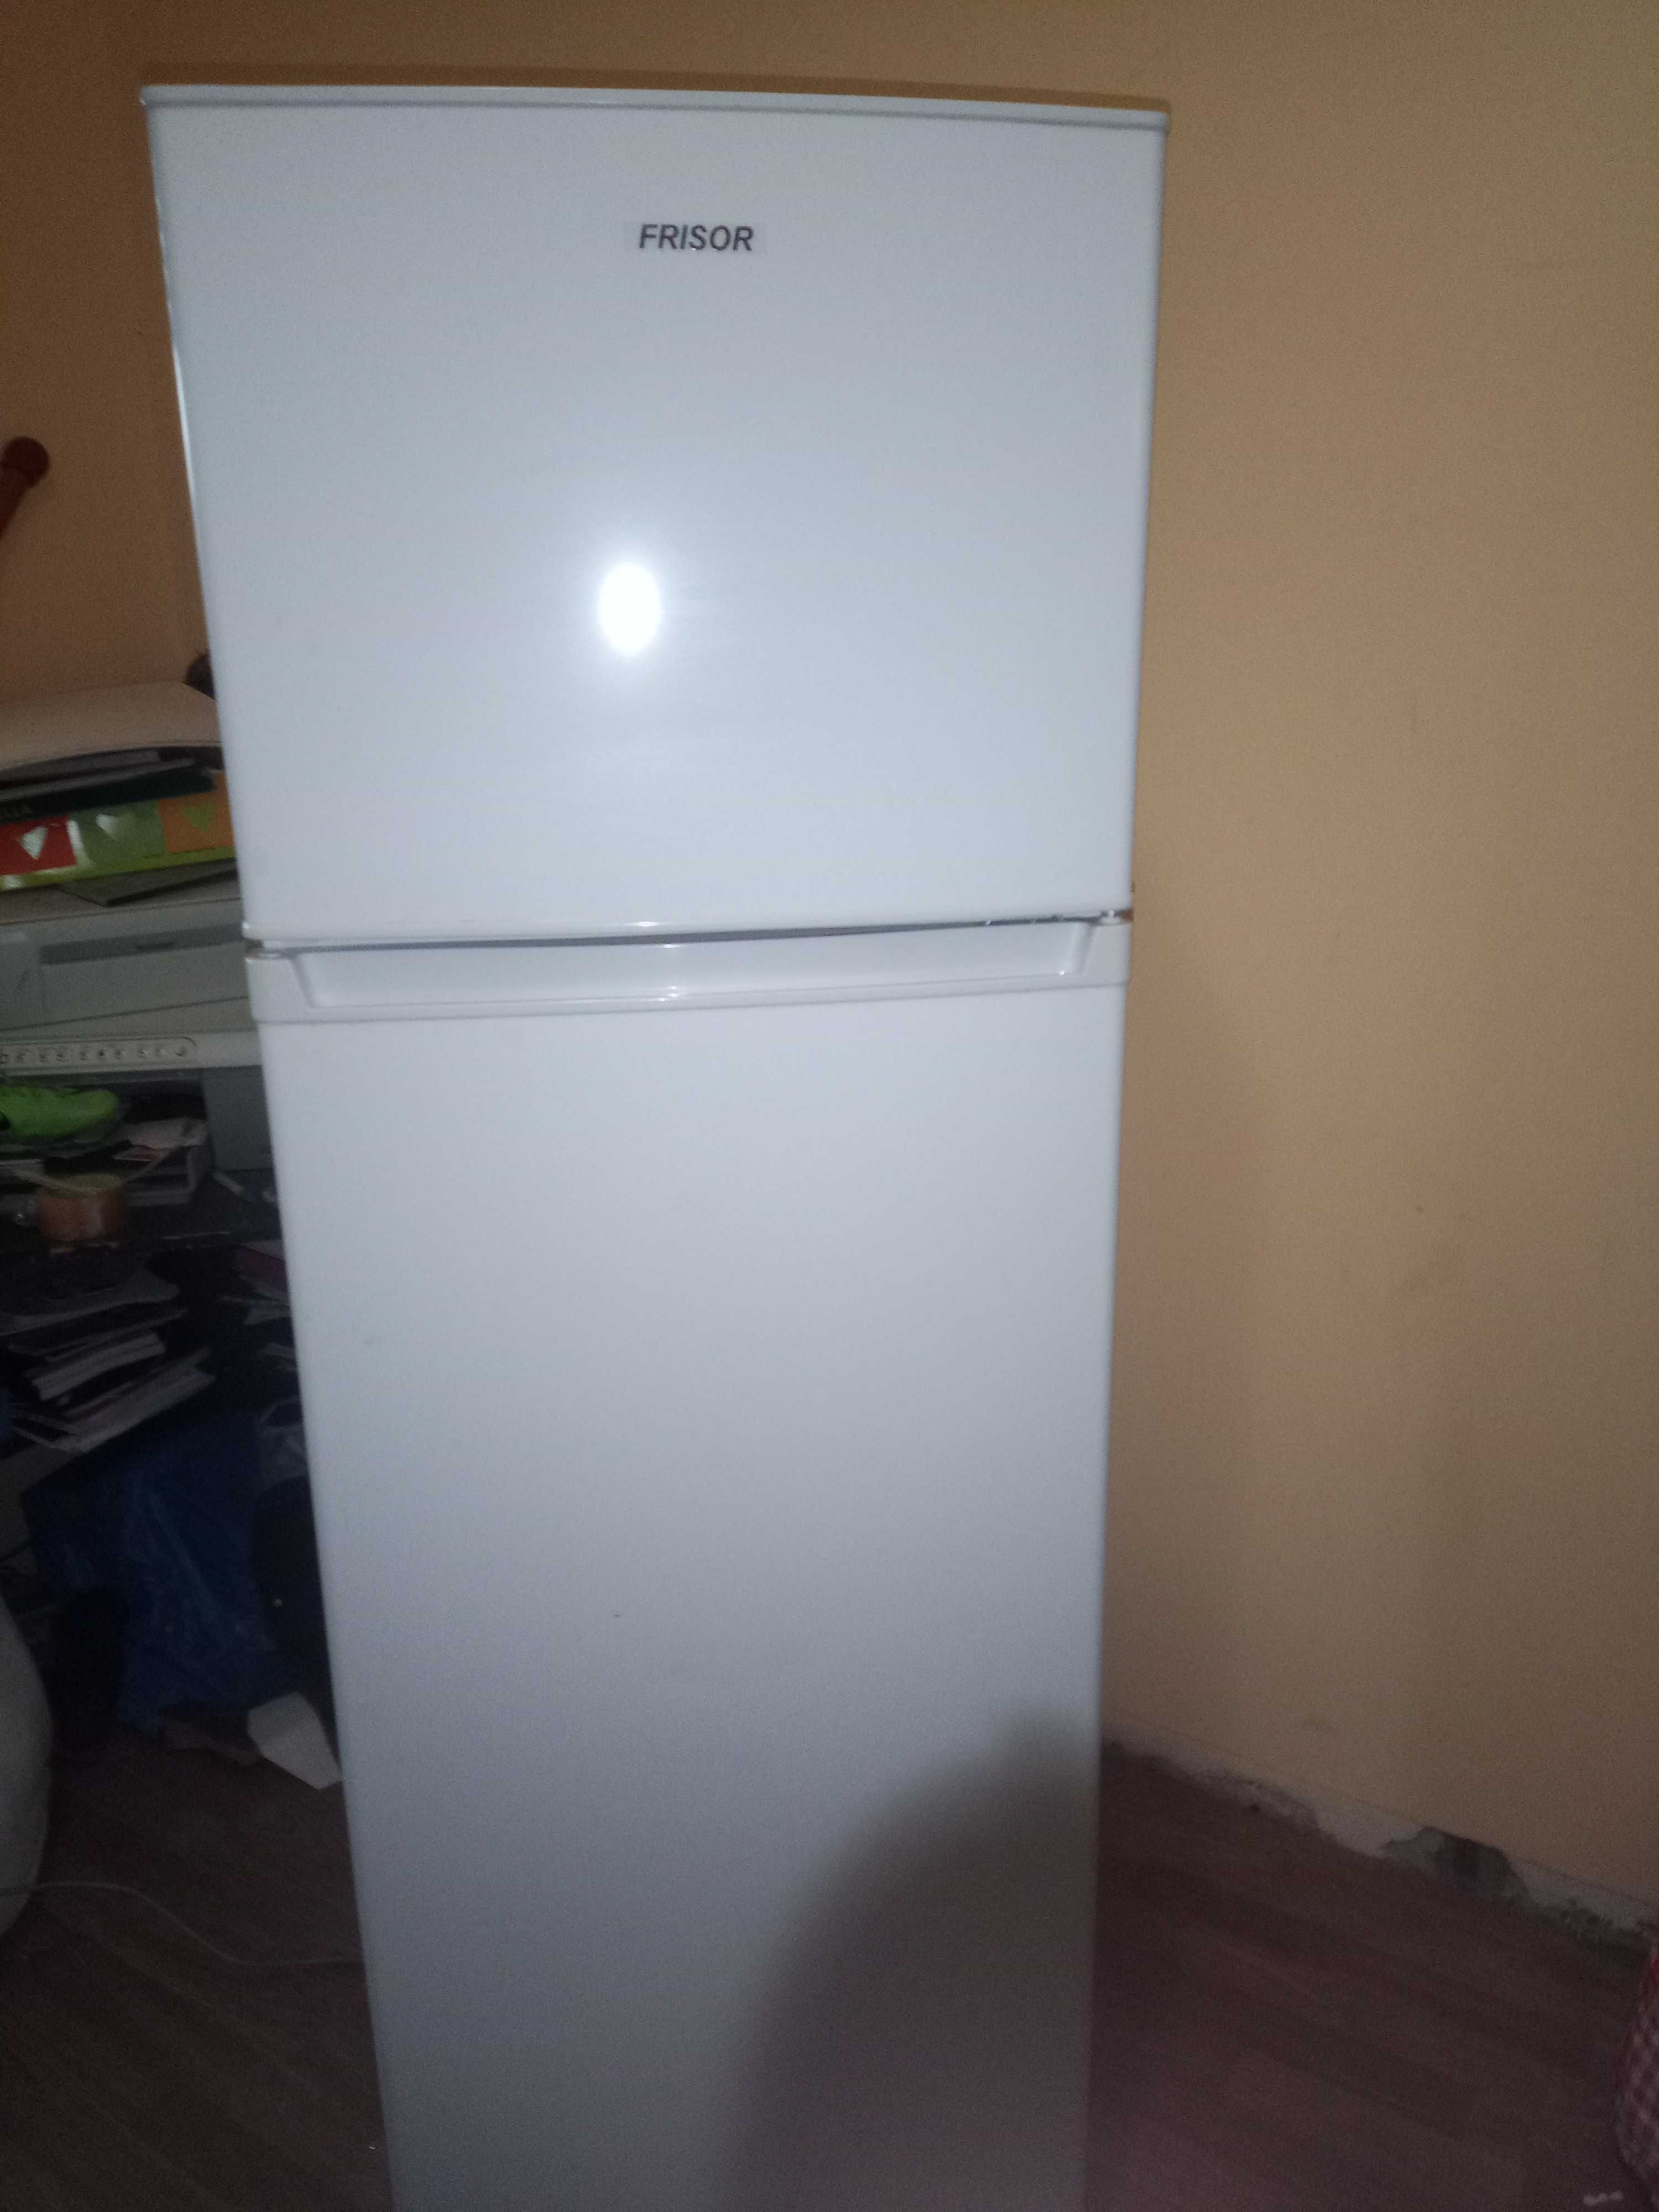 Vendo frigorífico Frisor